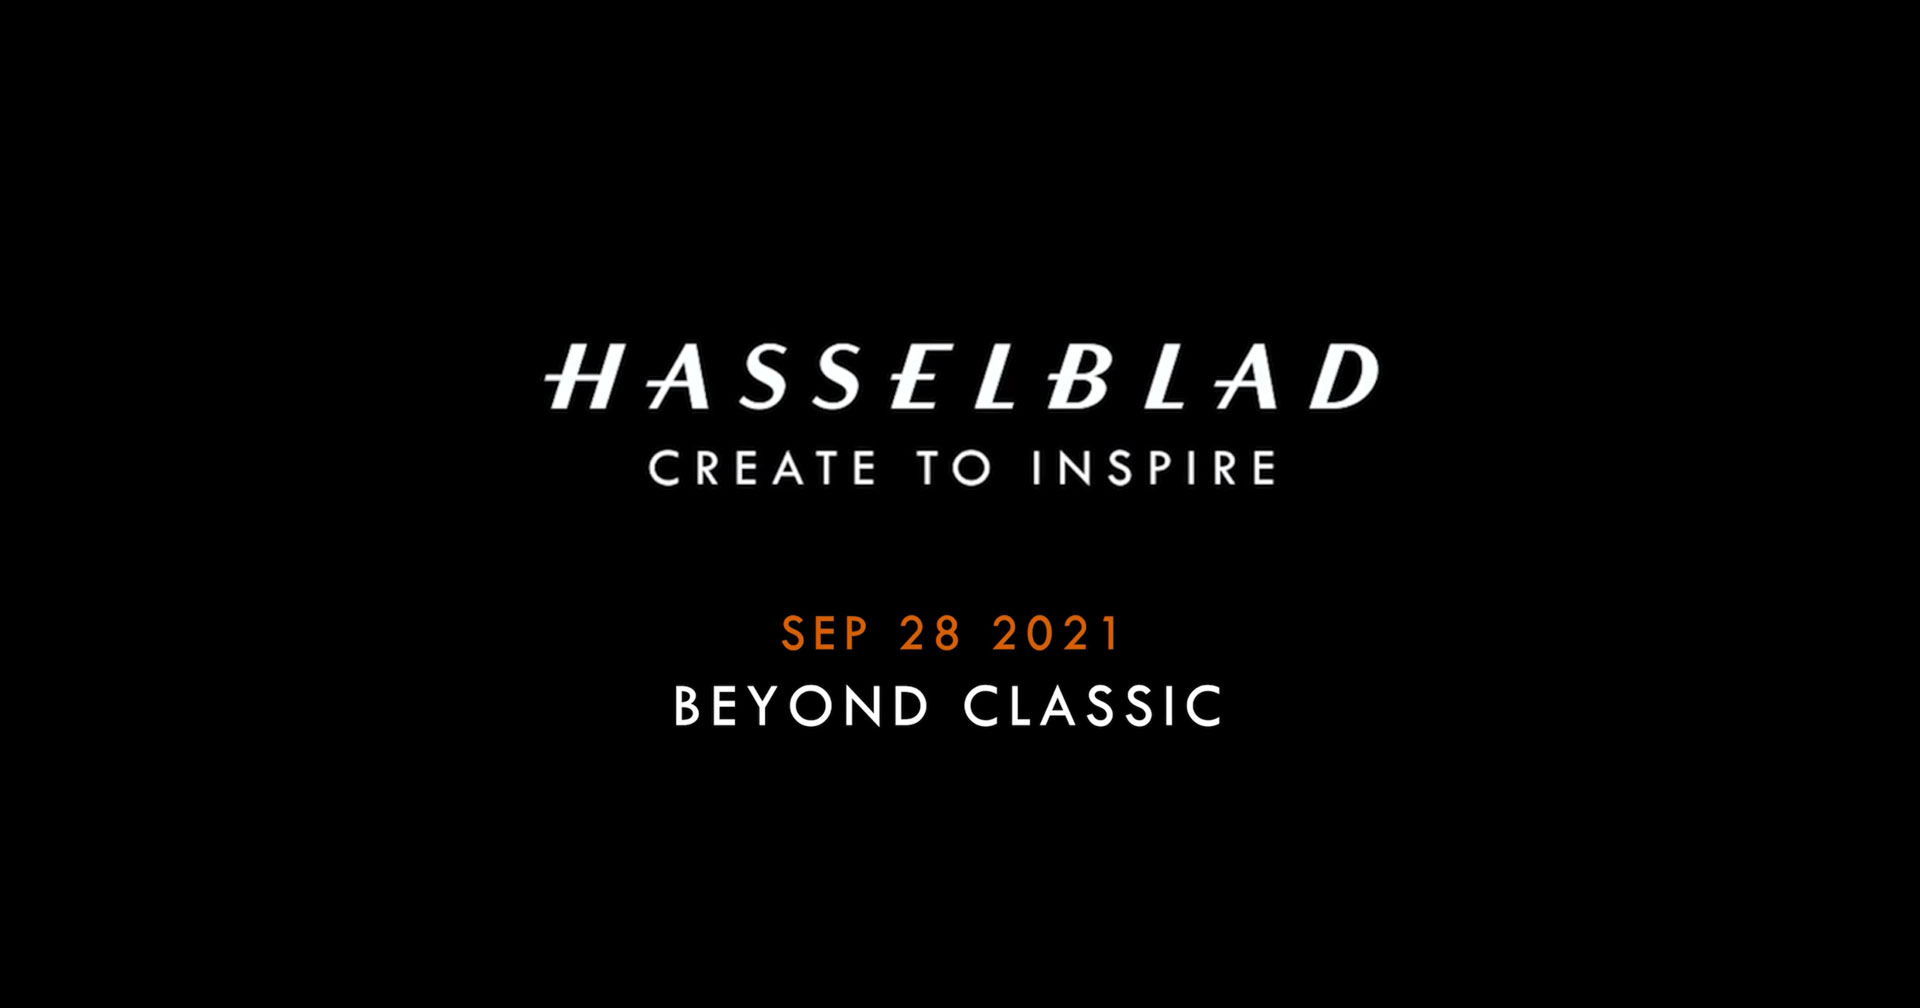 Hasselblad ปล่อยทีเซอร์ ‘Beyond Classic’ เตรียมเปิดตัวผลิตภัณฑ์ใหม่ 28 ก.ย.